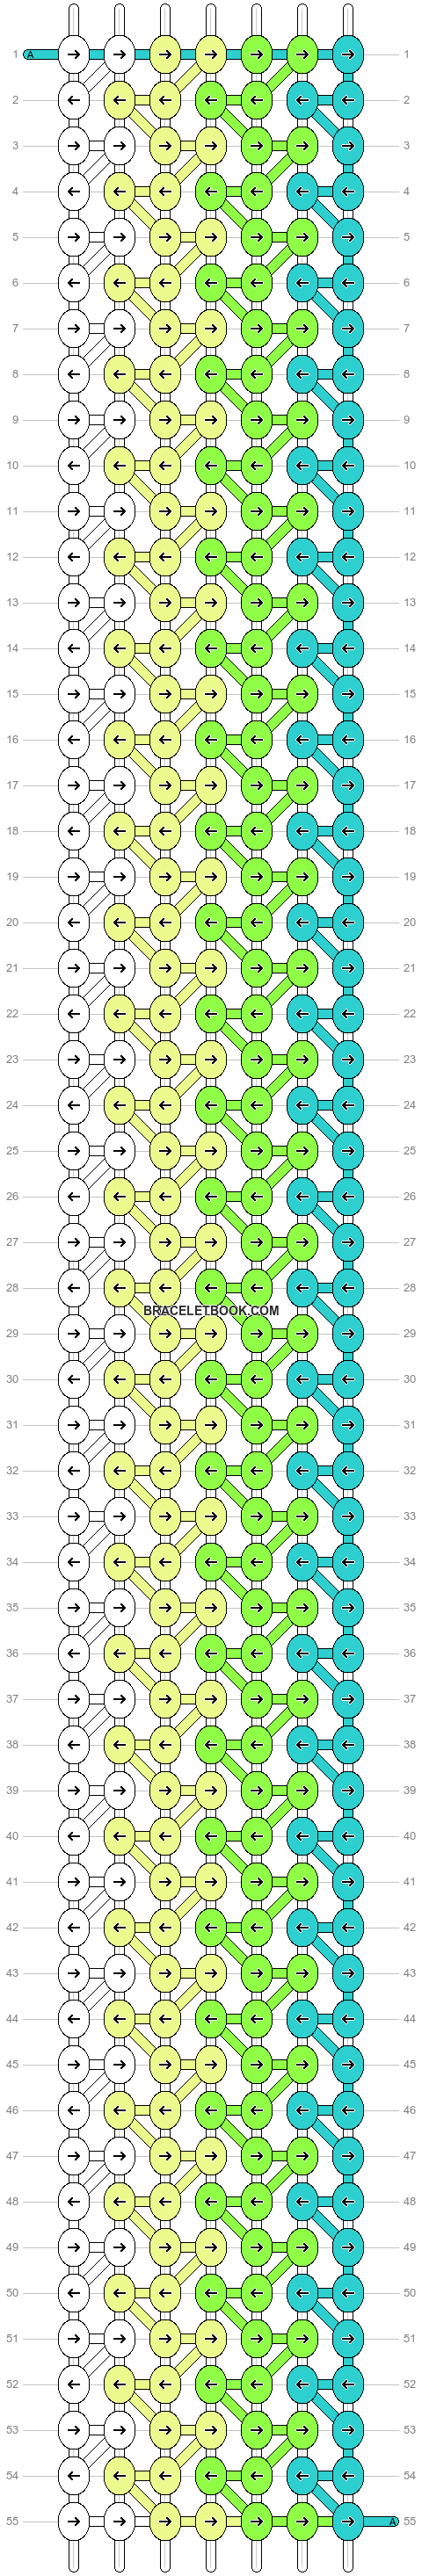 Alpha pattern #15230 variation #156440 pattern